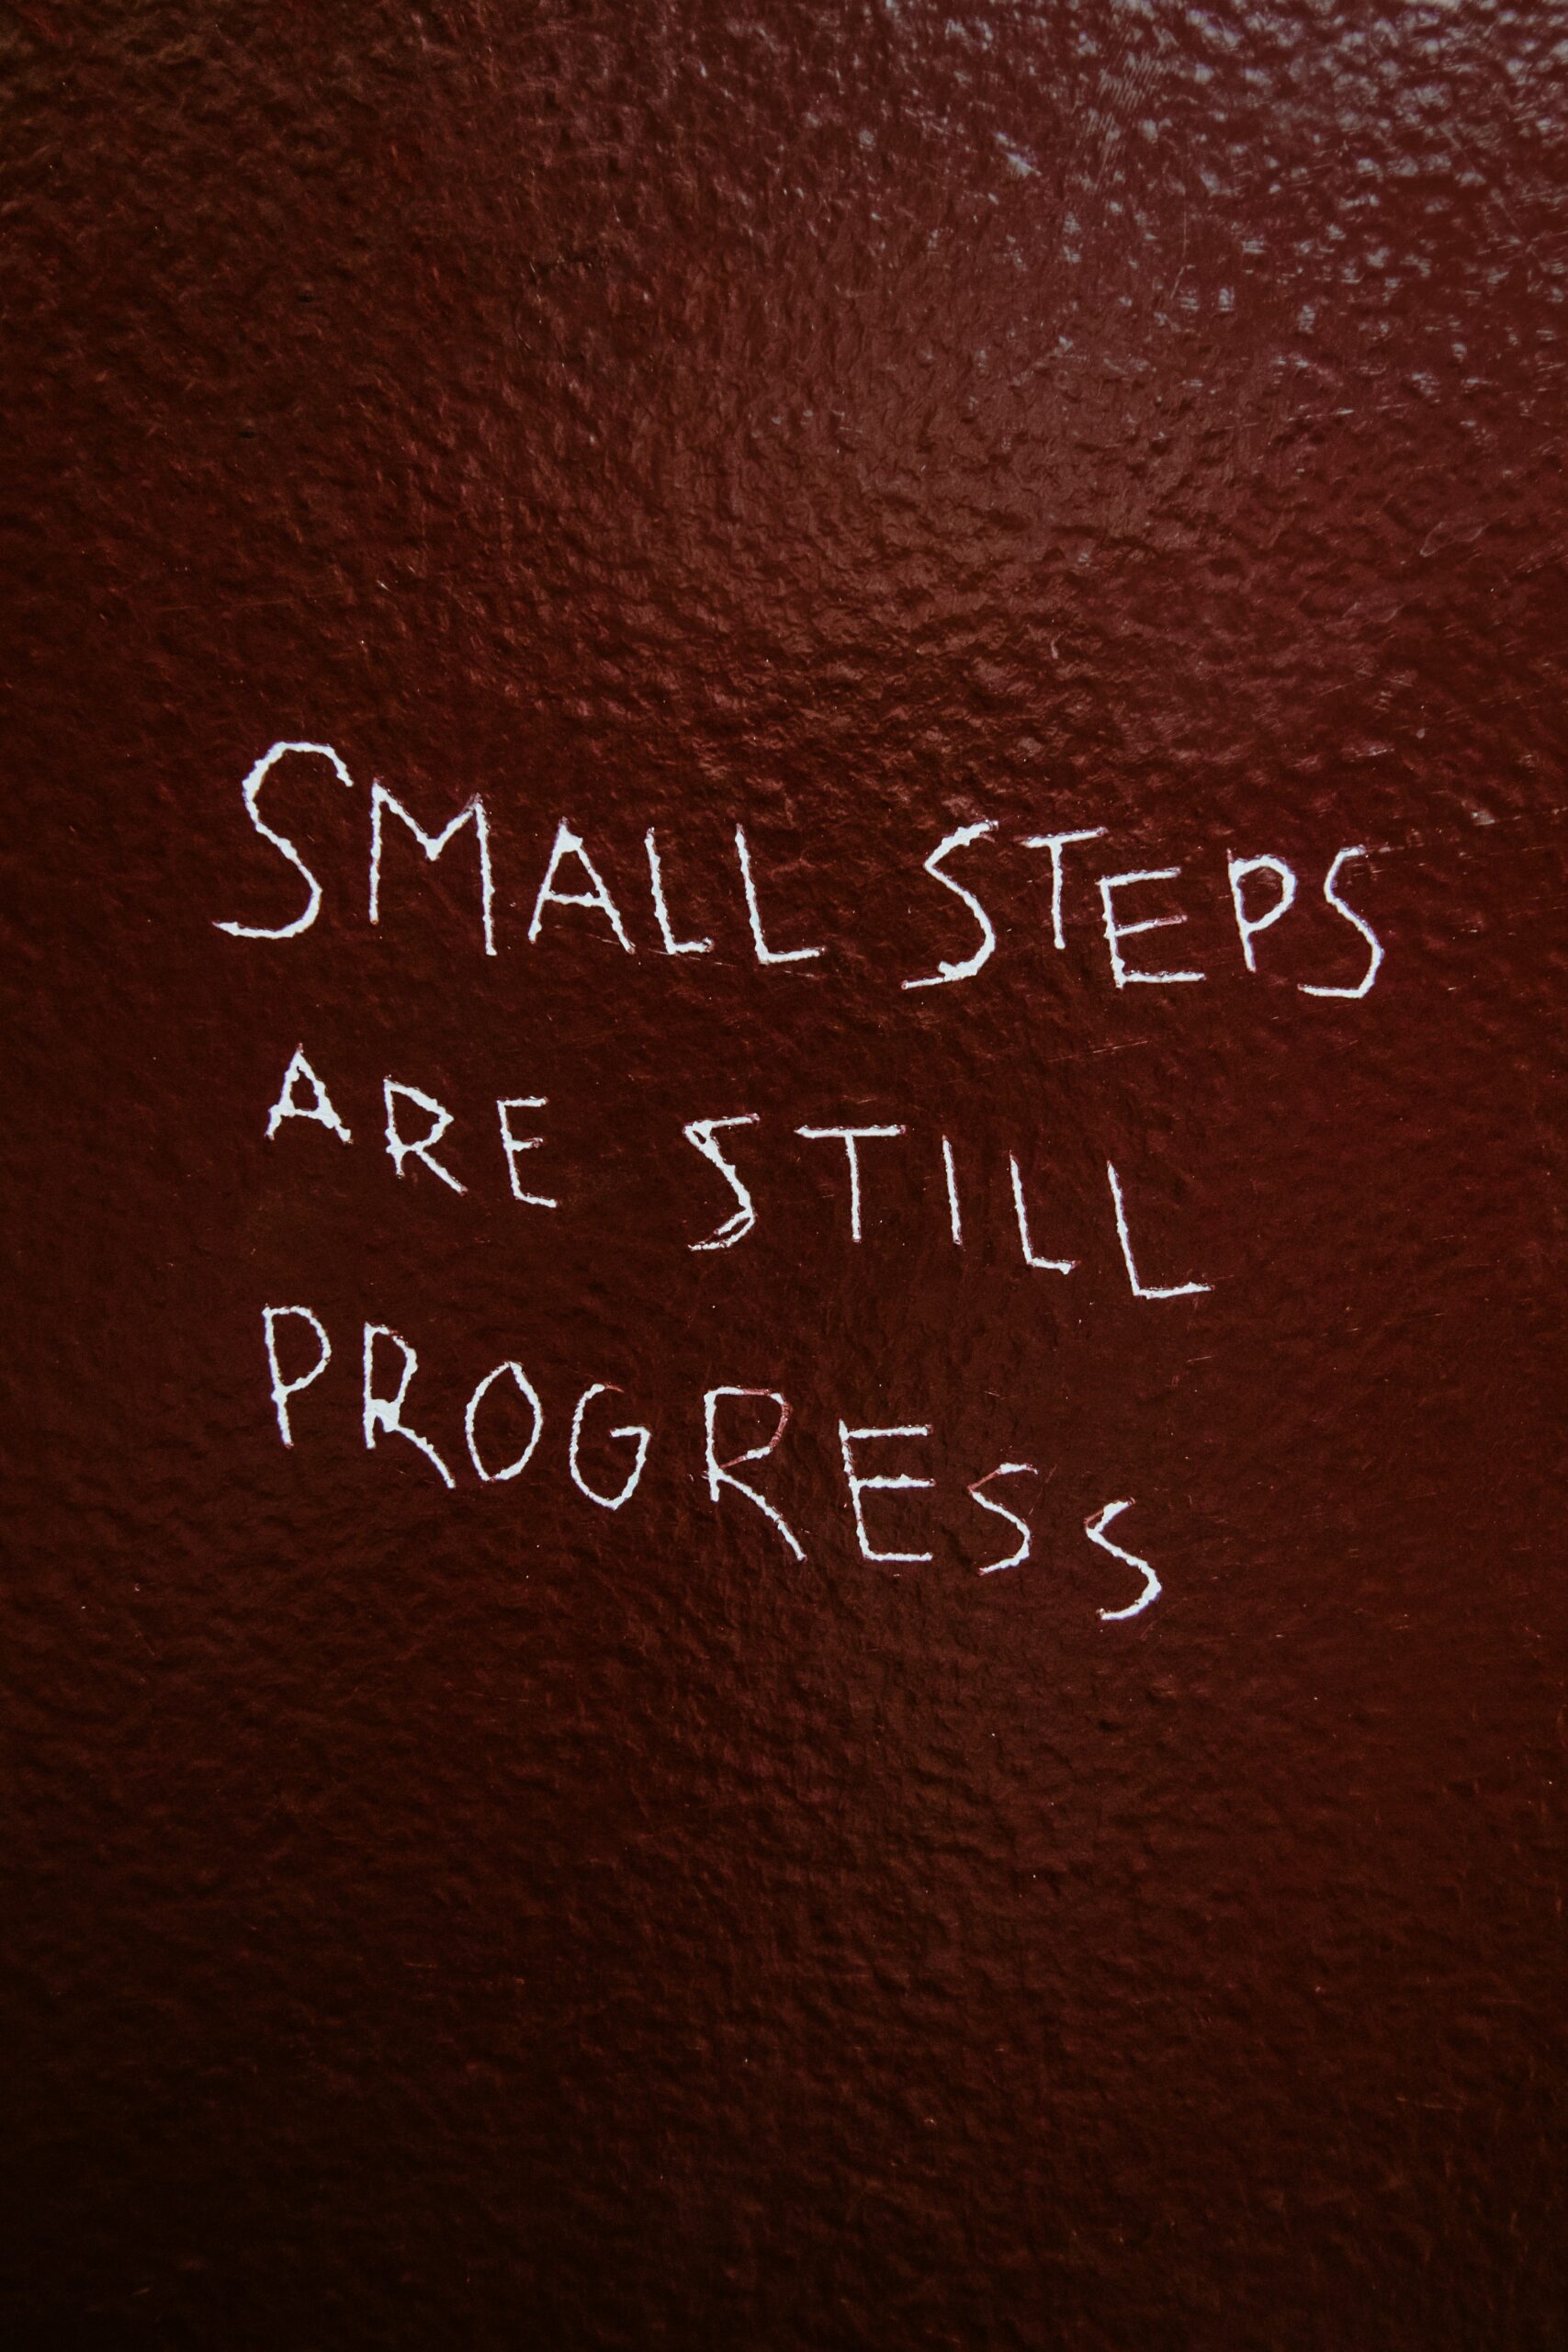 Meme stating that small steps are still progress